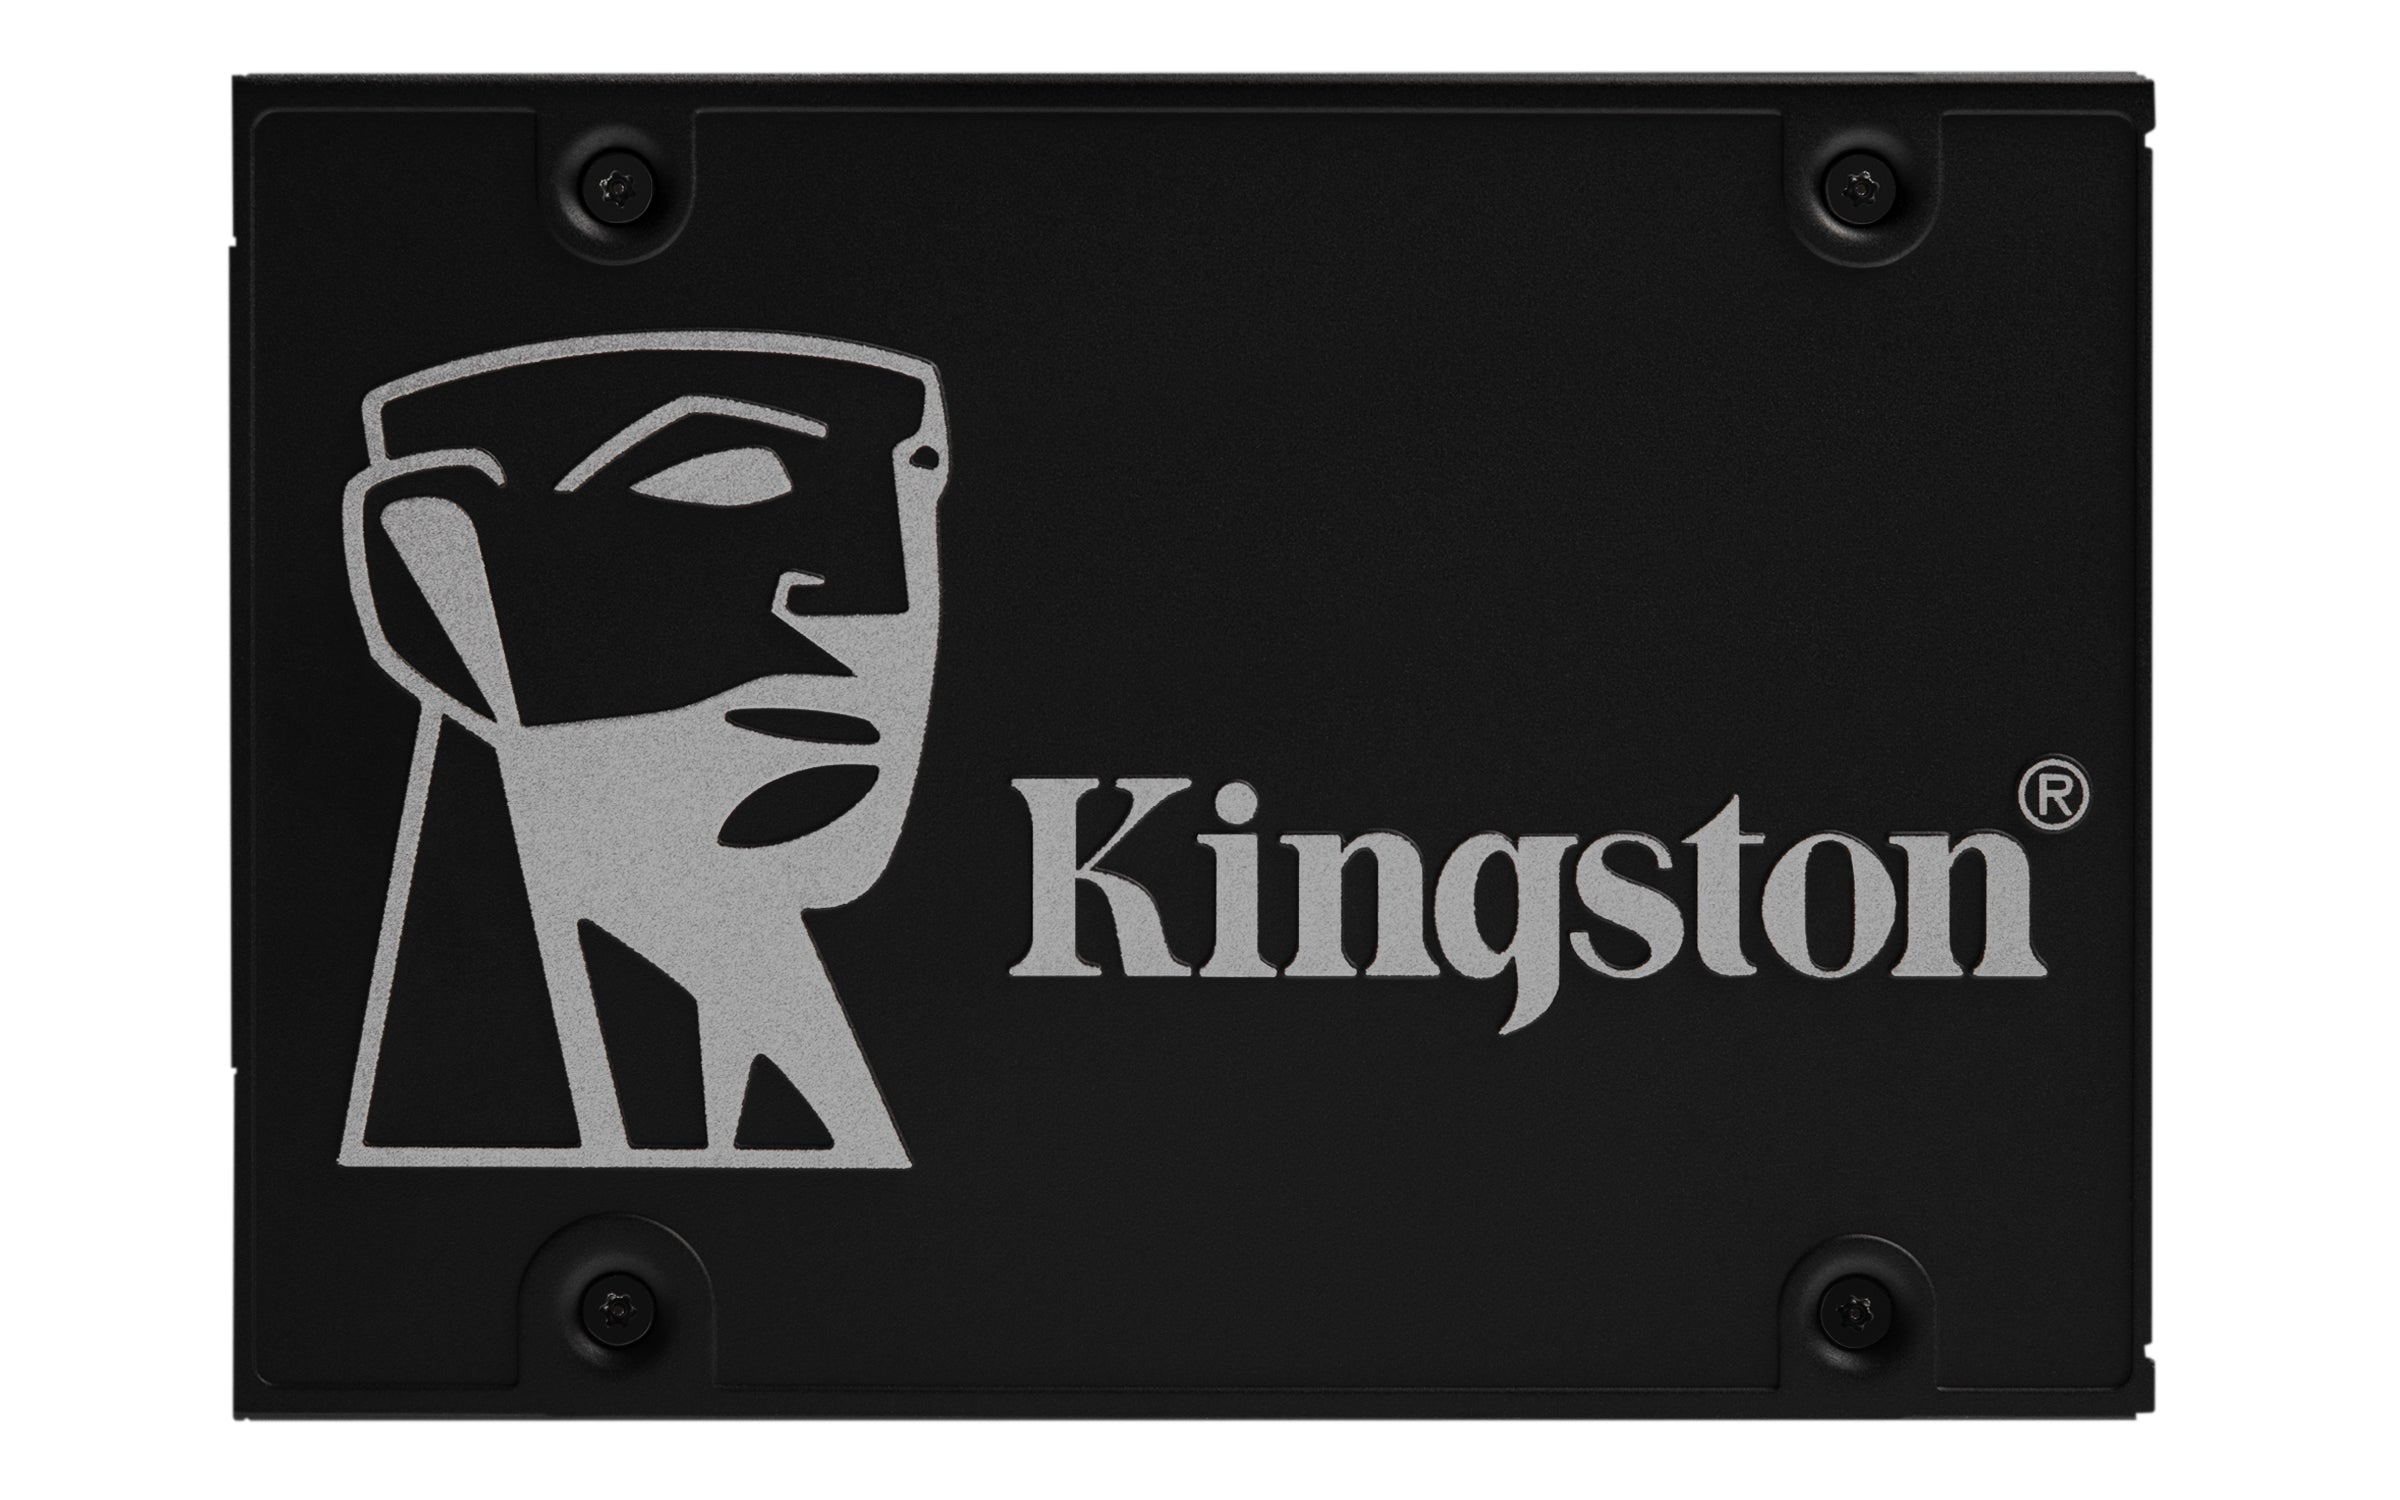 Ssd Kingston Technology Kc600 Unidad De Estado Solido 512Gb Sata3 2.5 R. 550Mb/S W.520Mb/S